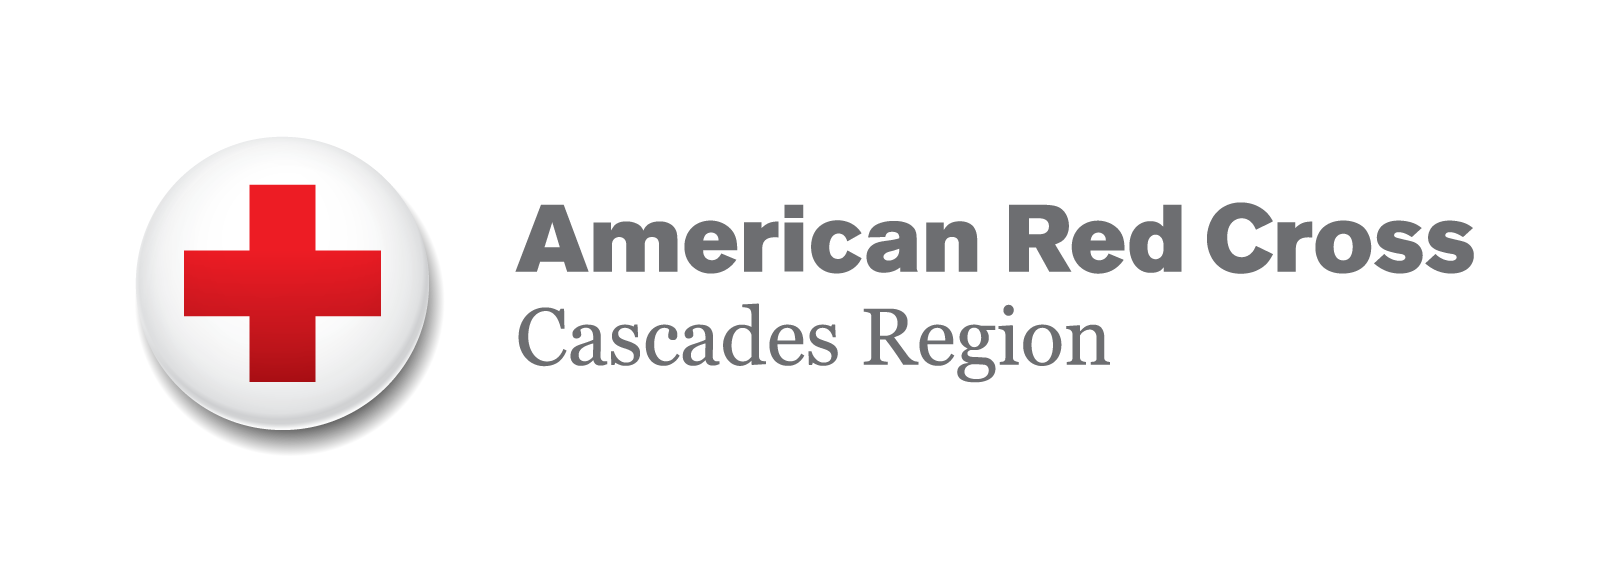 Cascades Region Red Cross logo, links to site